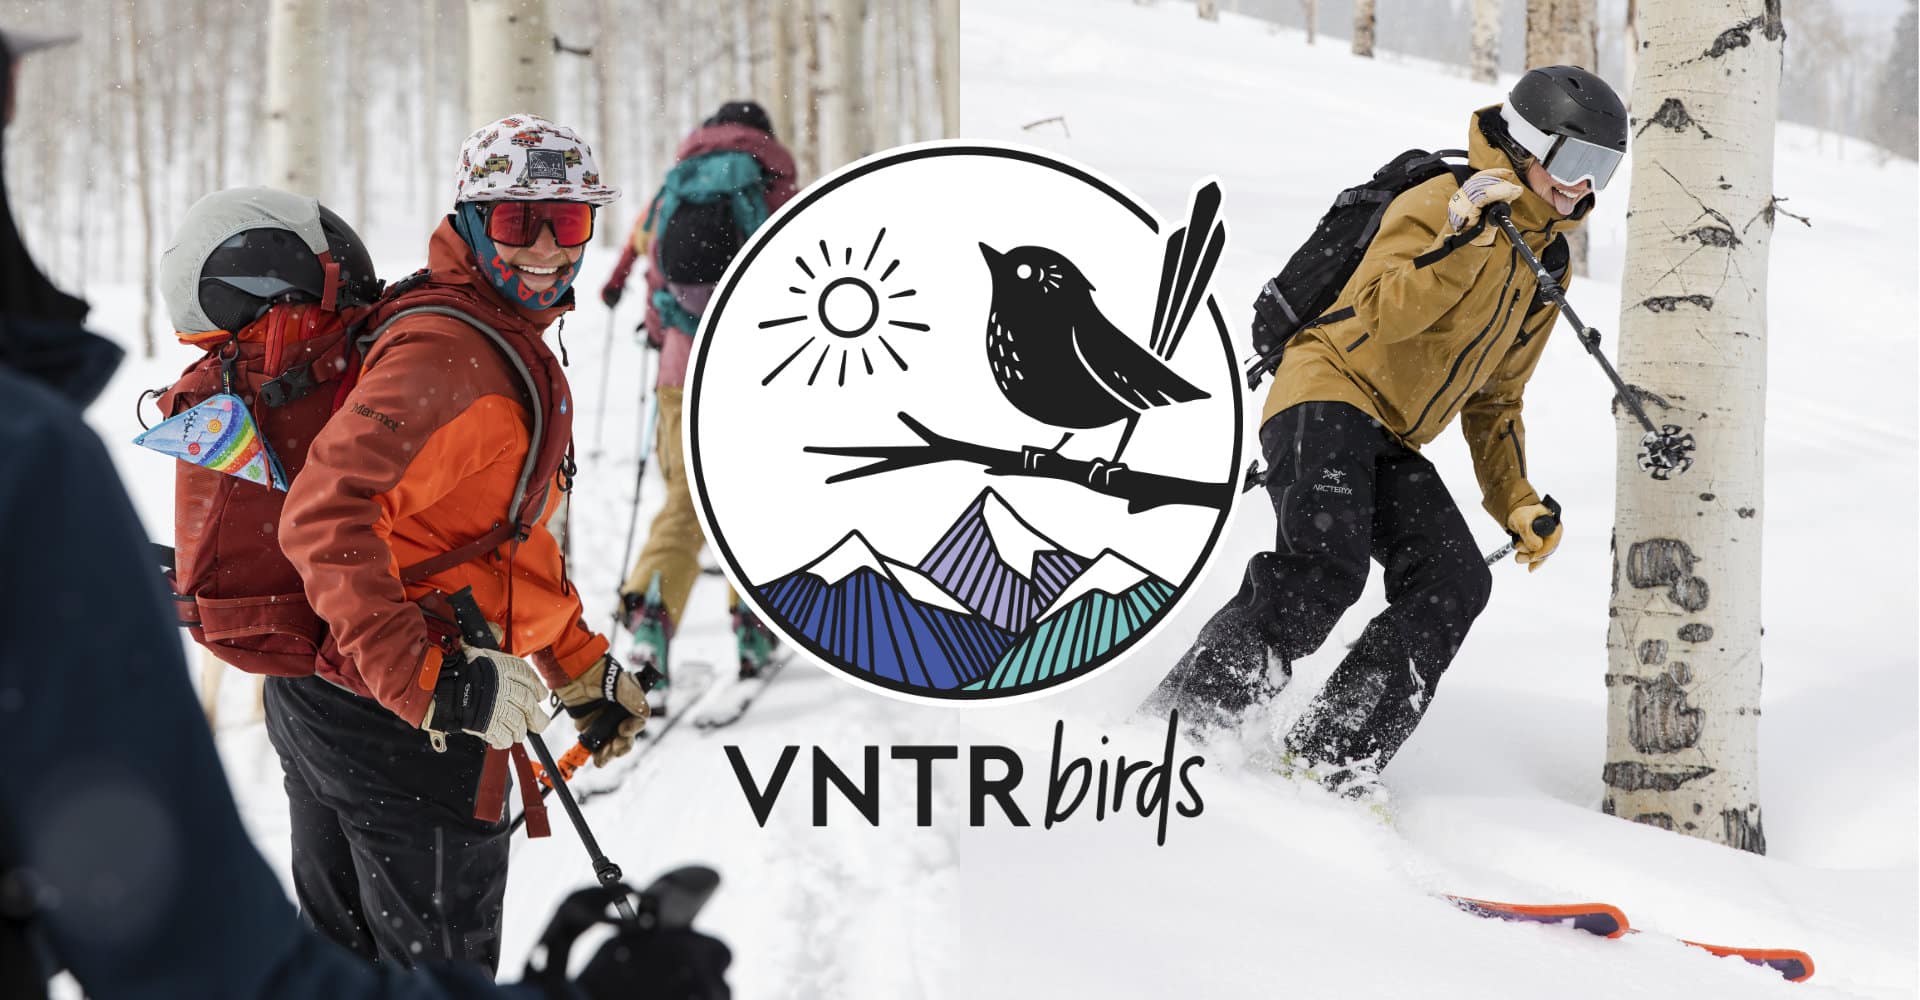 VNTRbirds backcountry scholarships